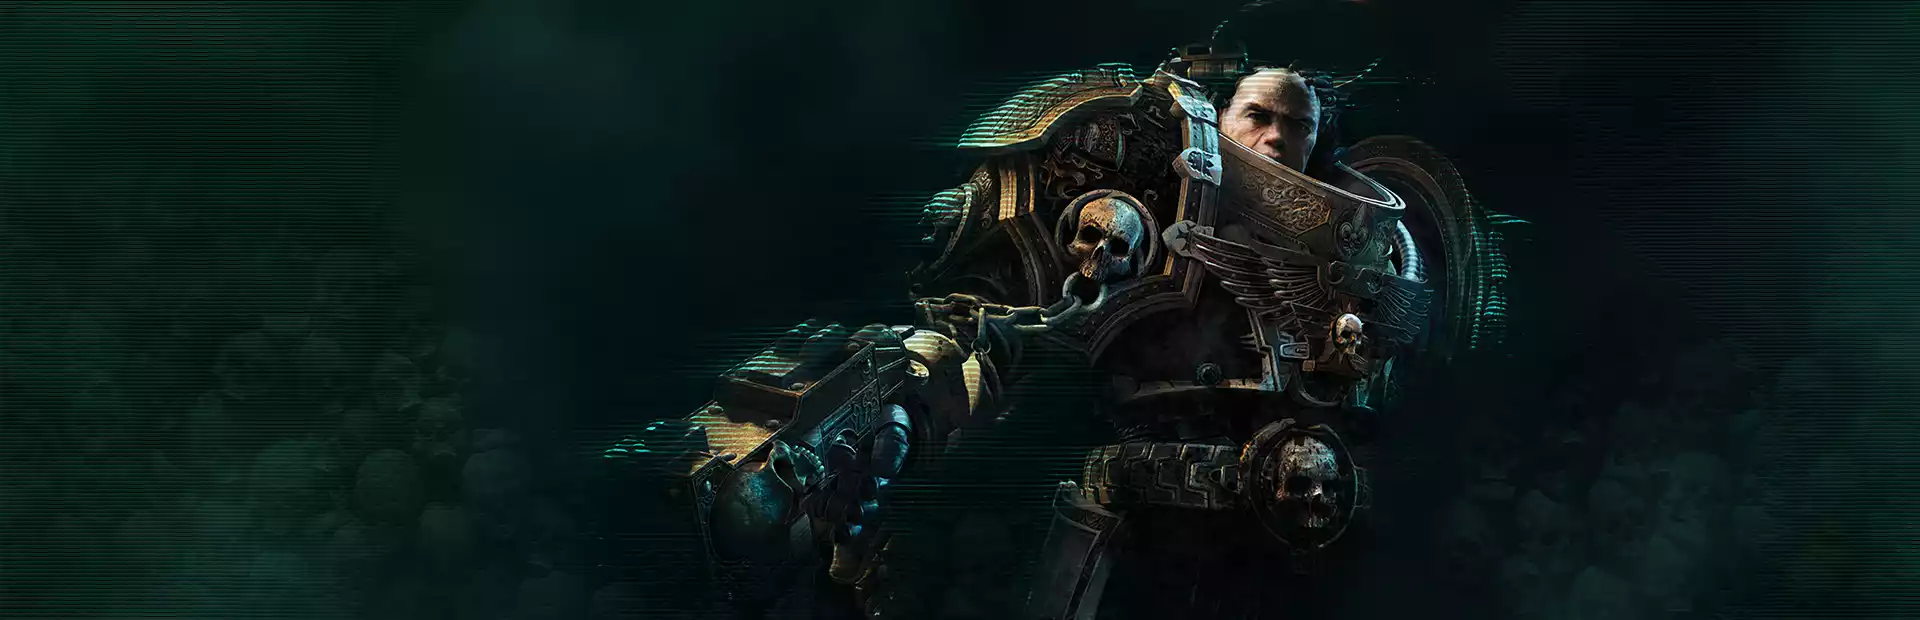 Warhammer 40,000: Inquisitor Martyr Steam Key GLOBAL